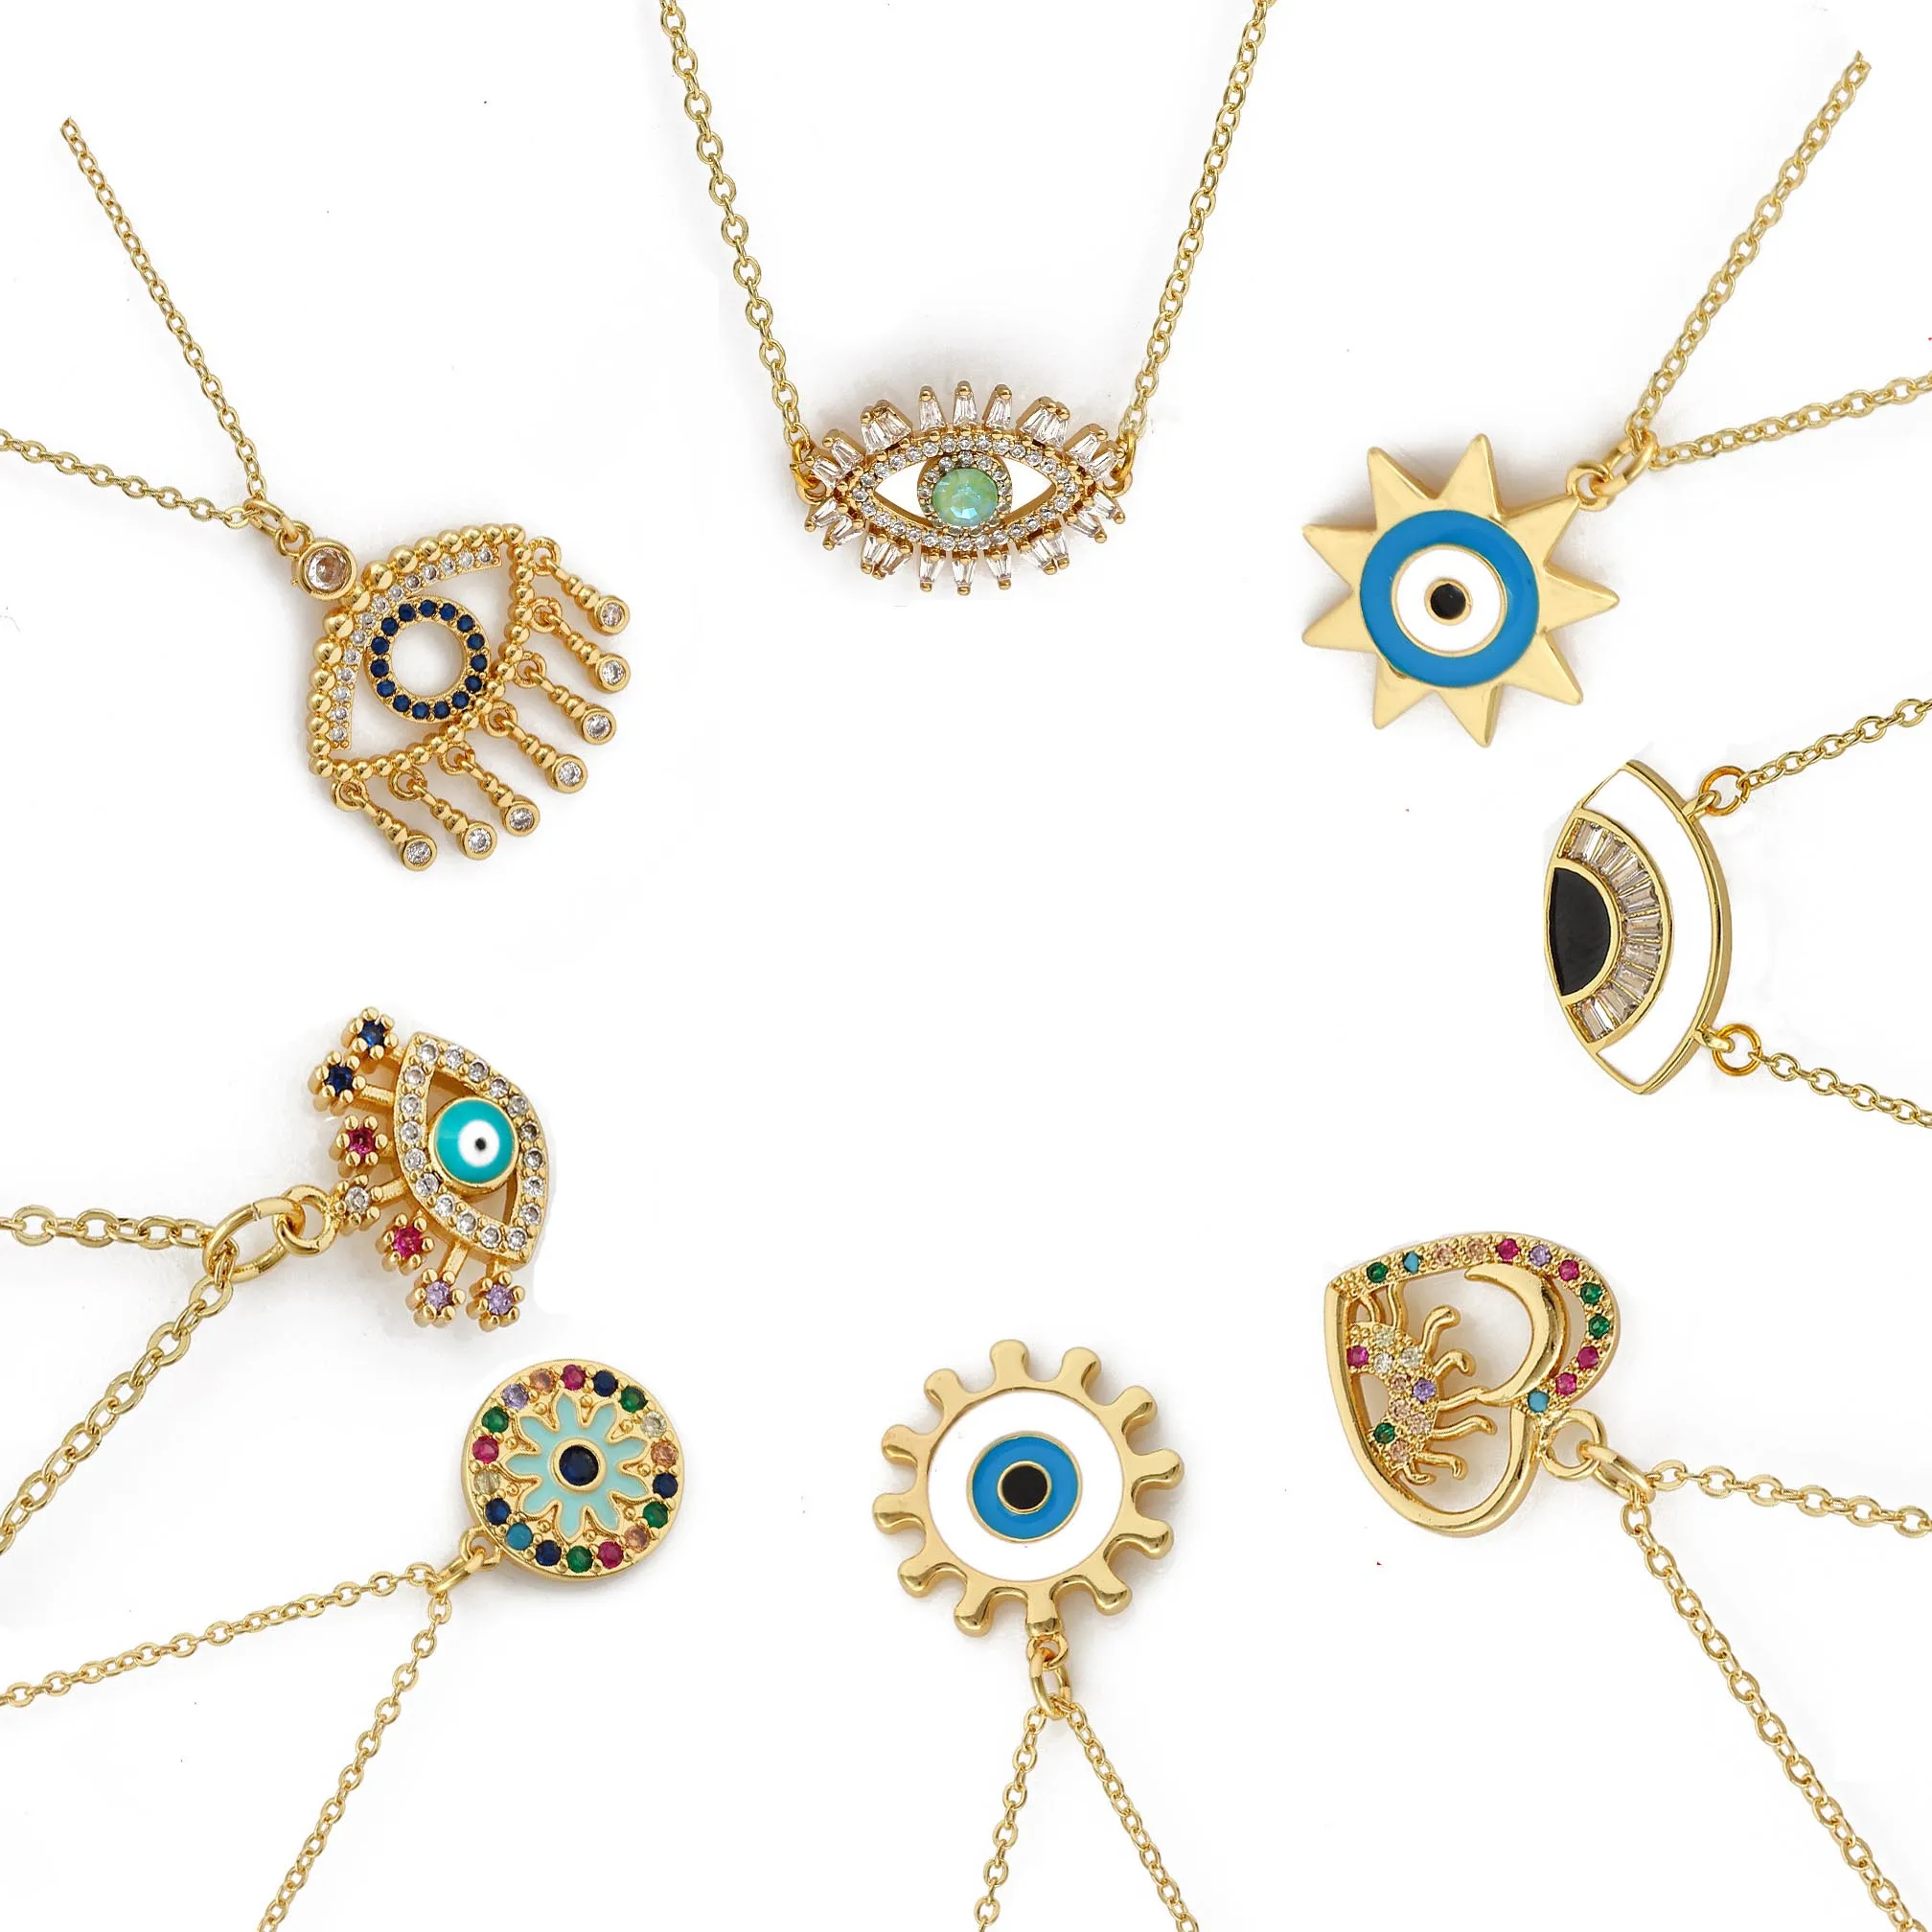 Personality Bohemian Gold Plated Chic Women Turkish Evil Eye Necklace Rhinestone Pendant Choker Necklace Jewelry for Women 2021